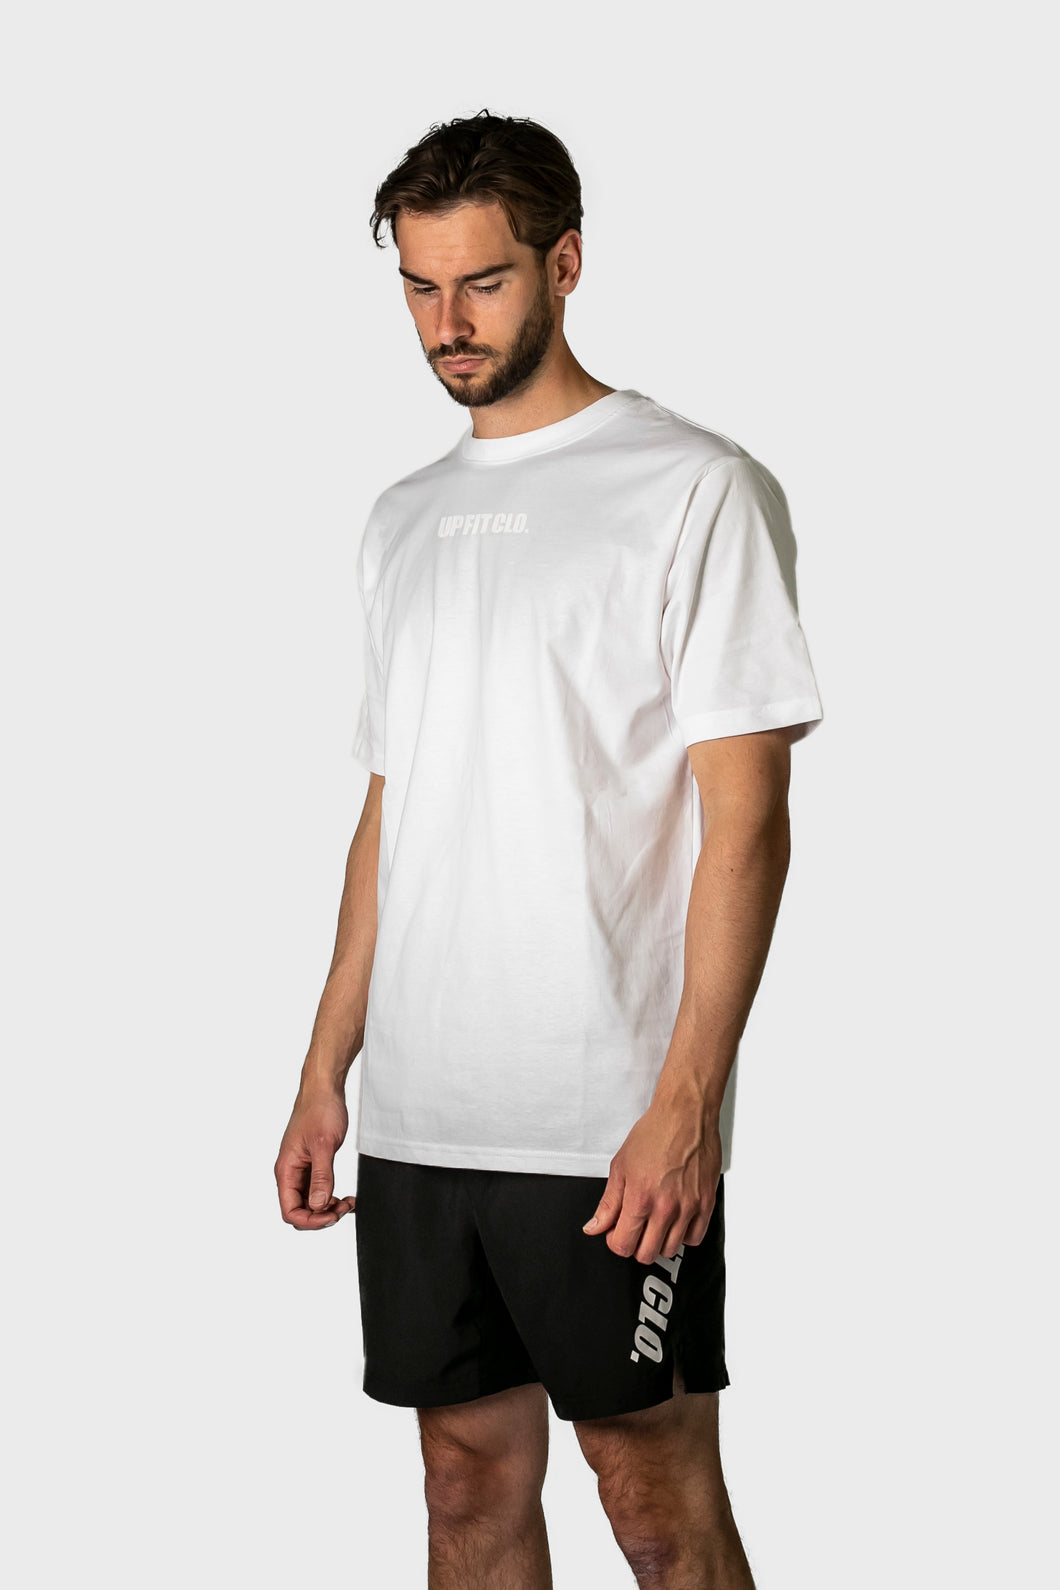 UPFITCLO. Oversized Shirt Reflective White